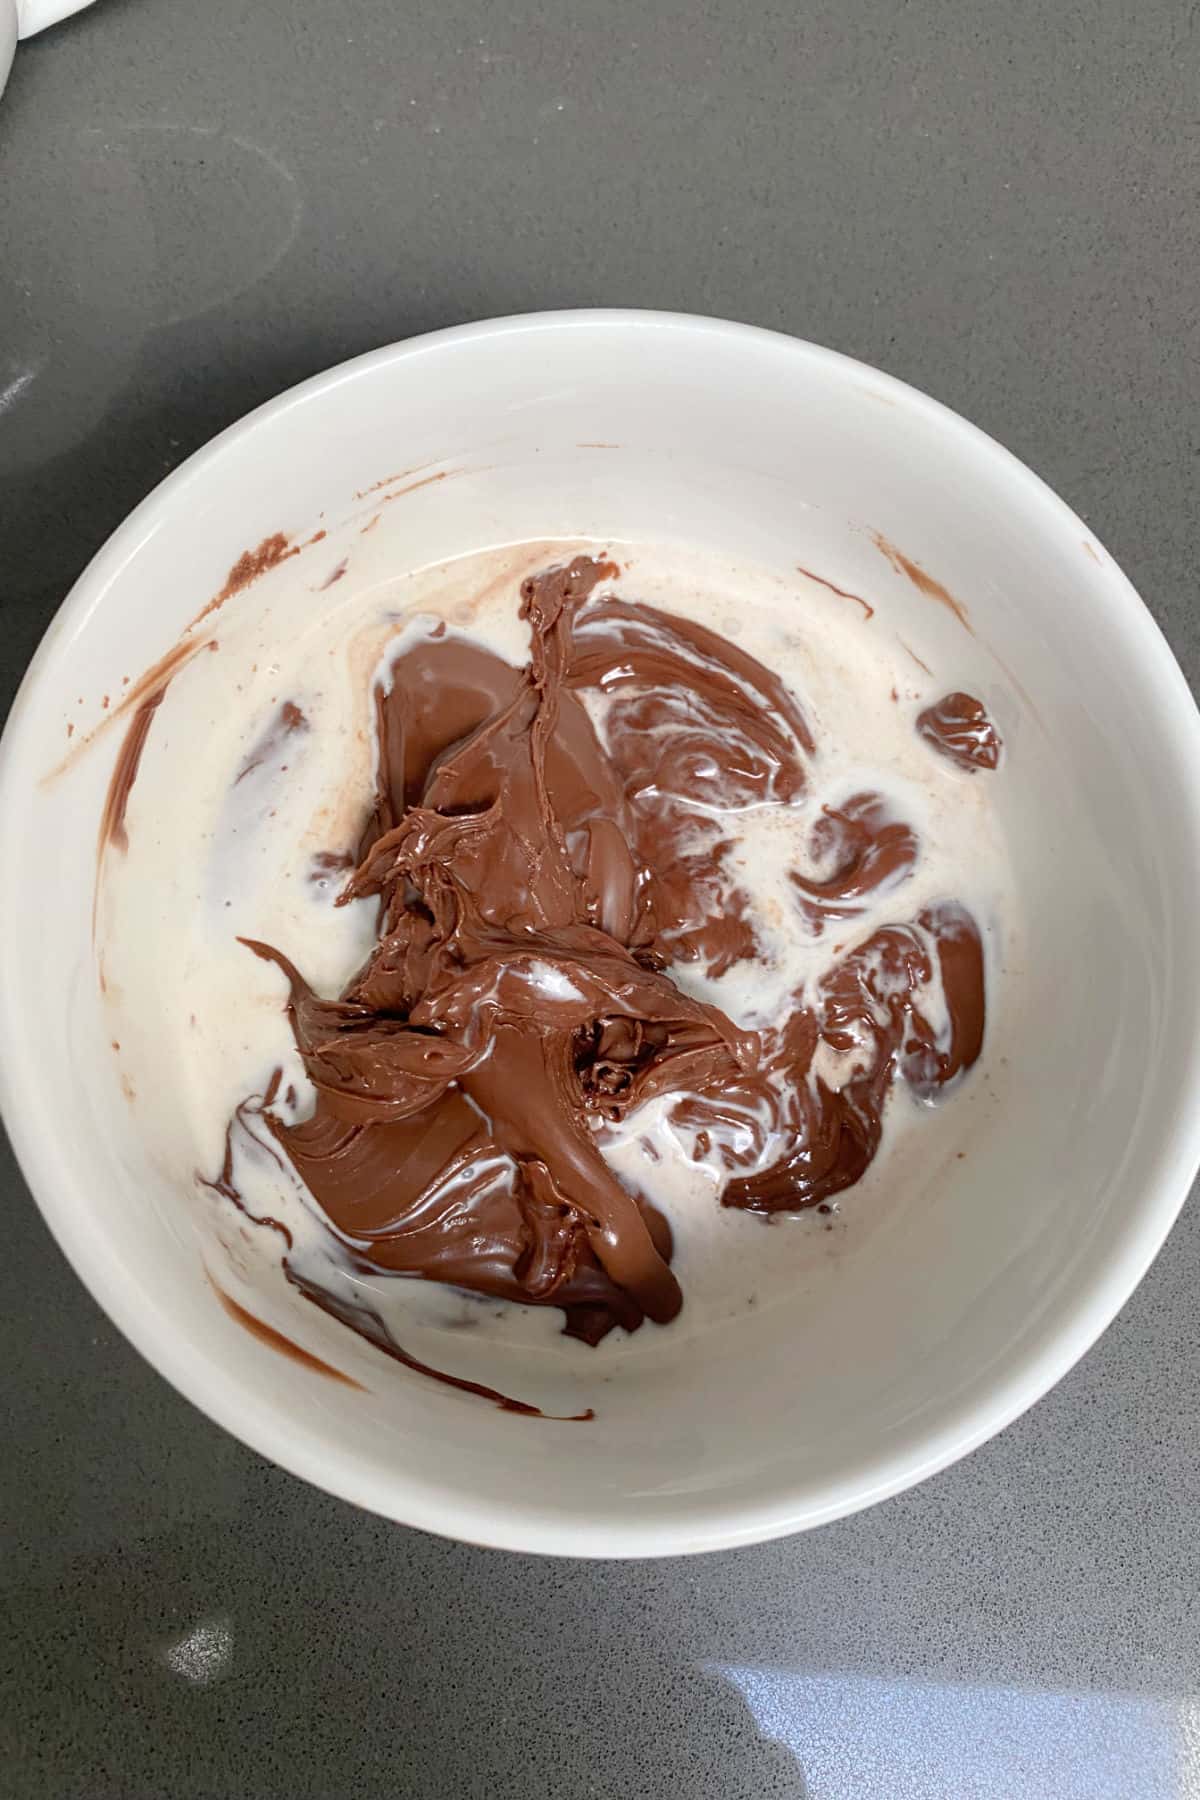 Nutella and cream in bowl.